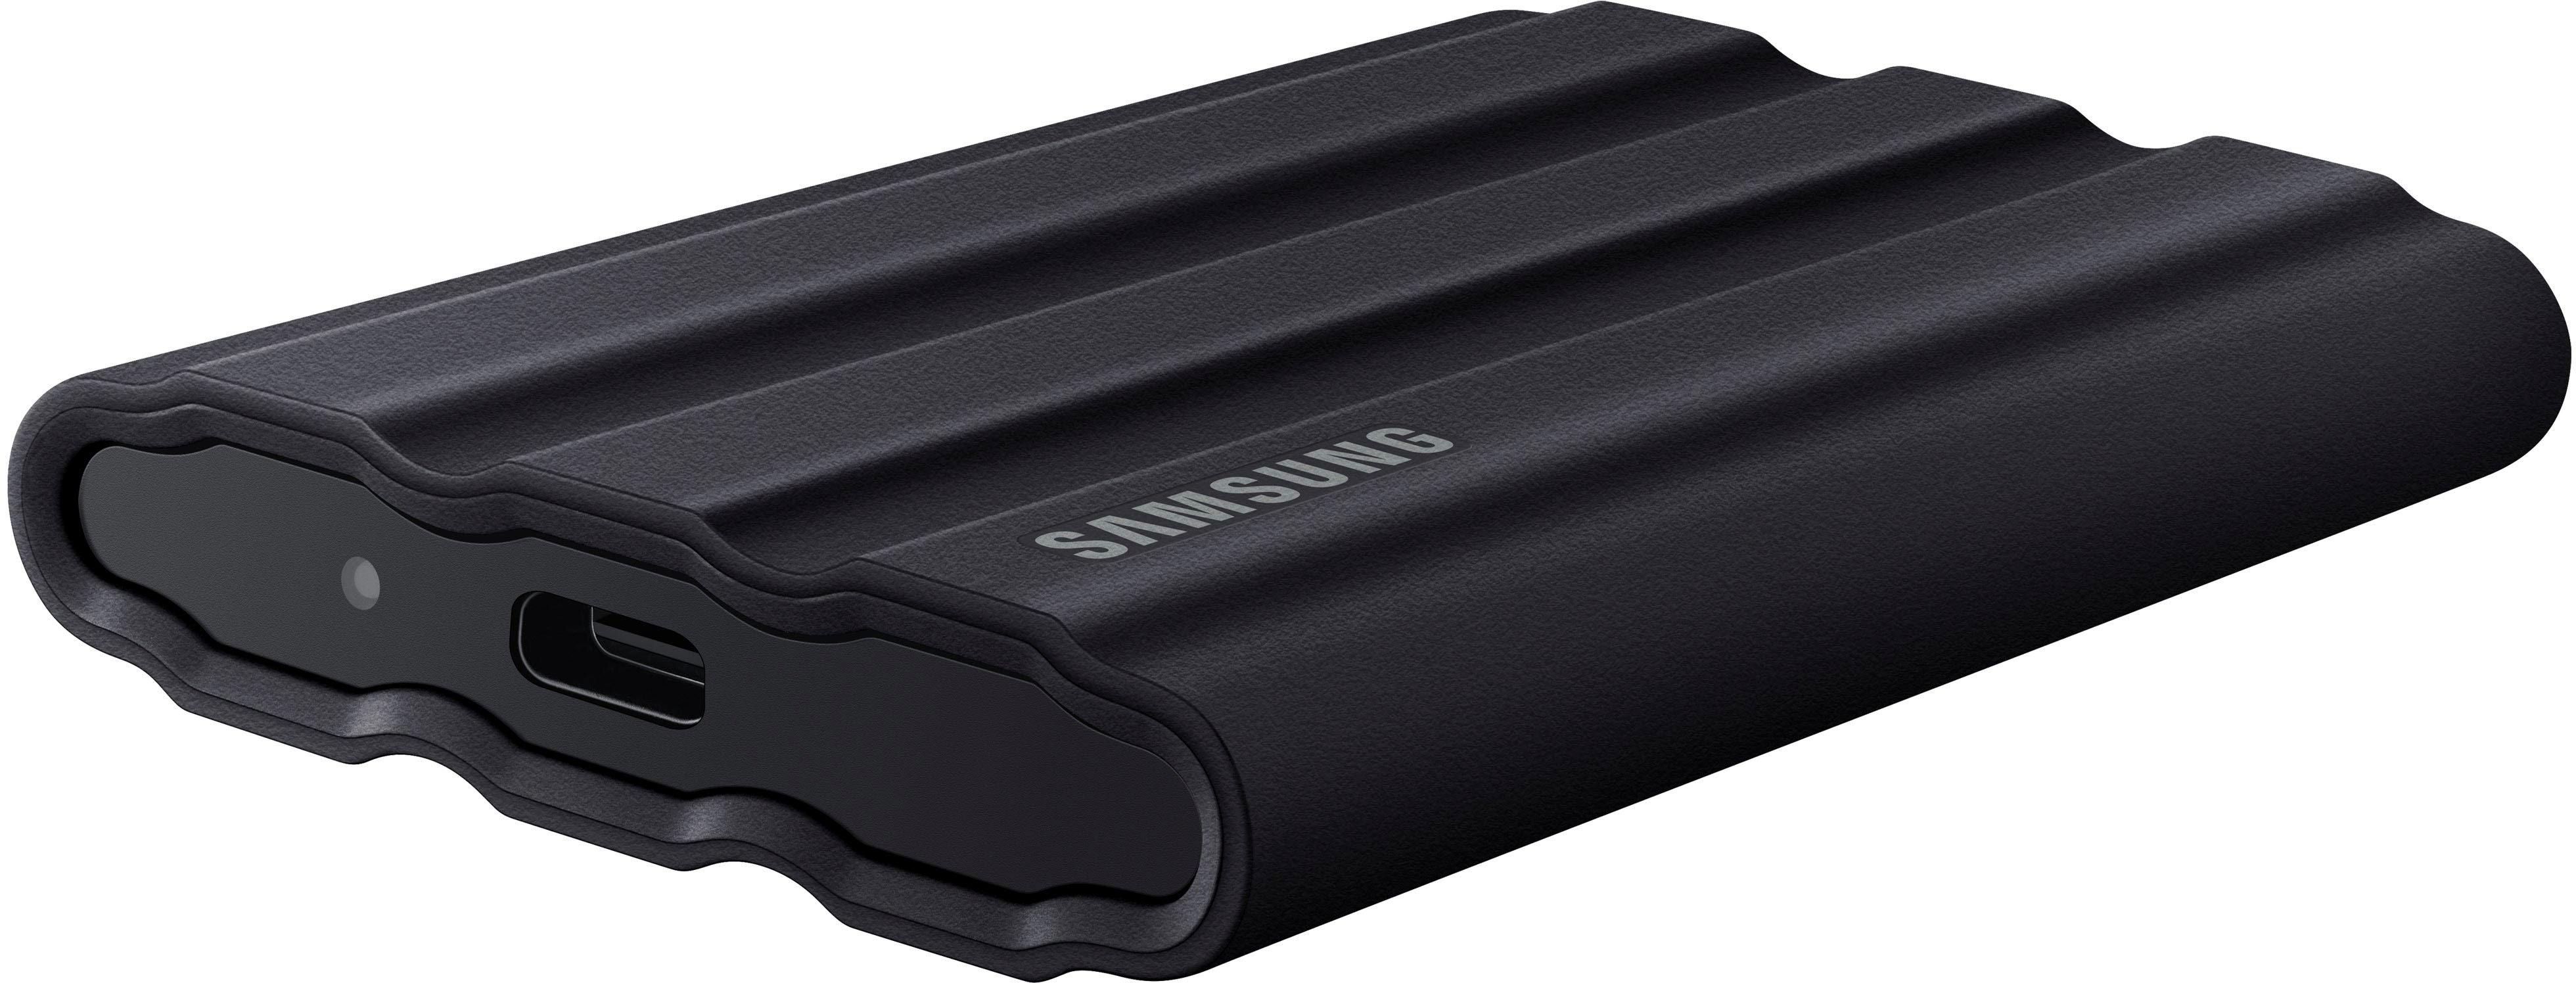 Samsung T7 Portable SSD 1TB USB 3.2 Gen 2 External Solid State